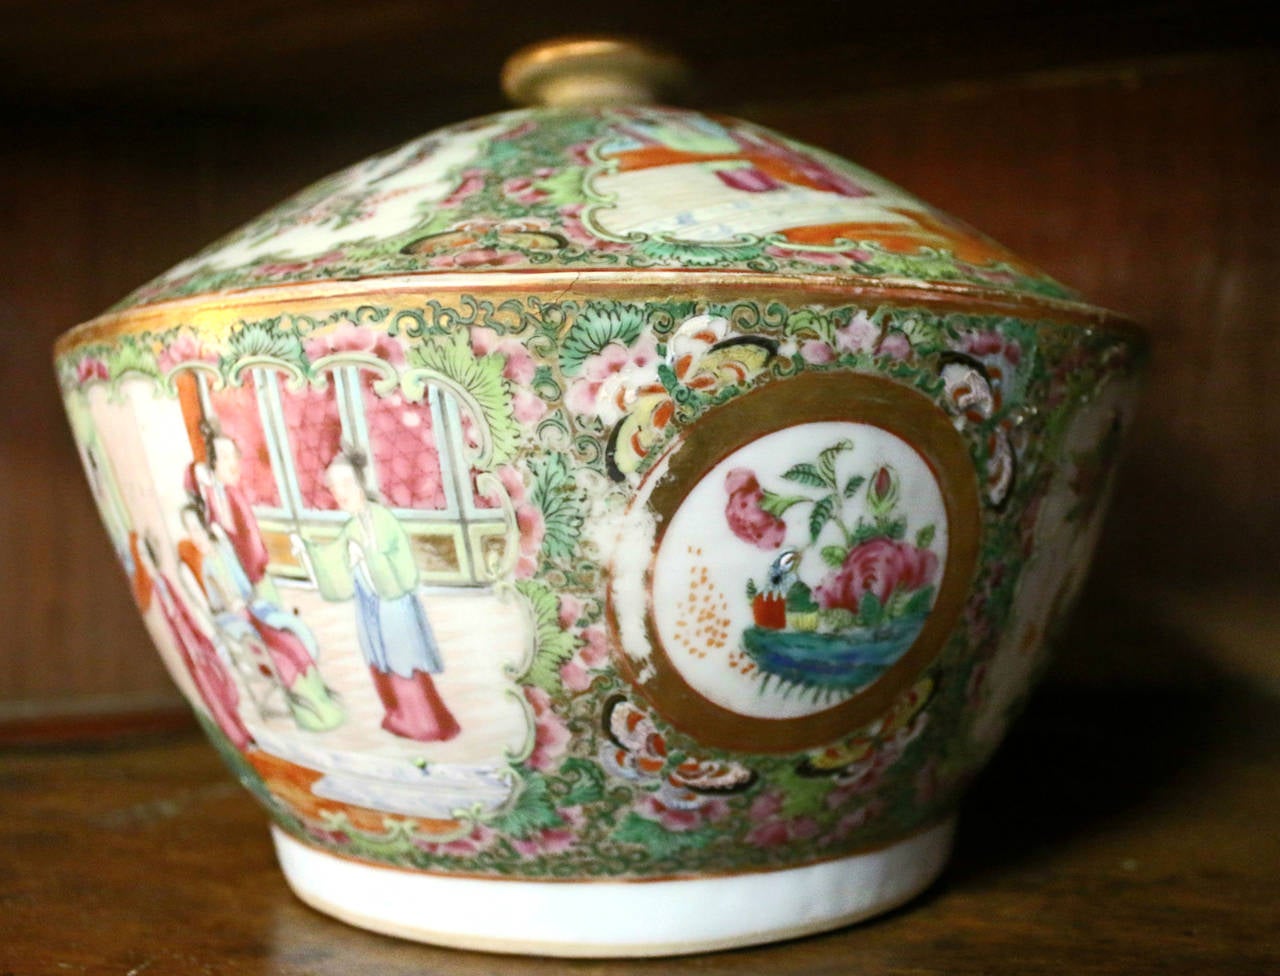 19th century chamber pot